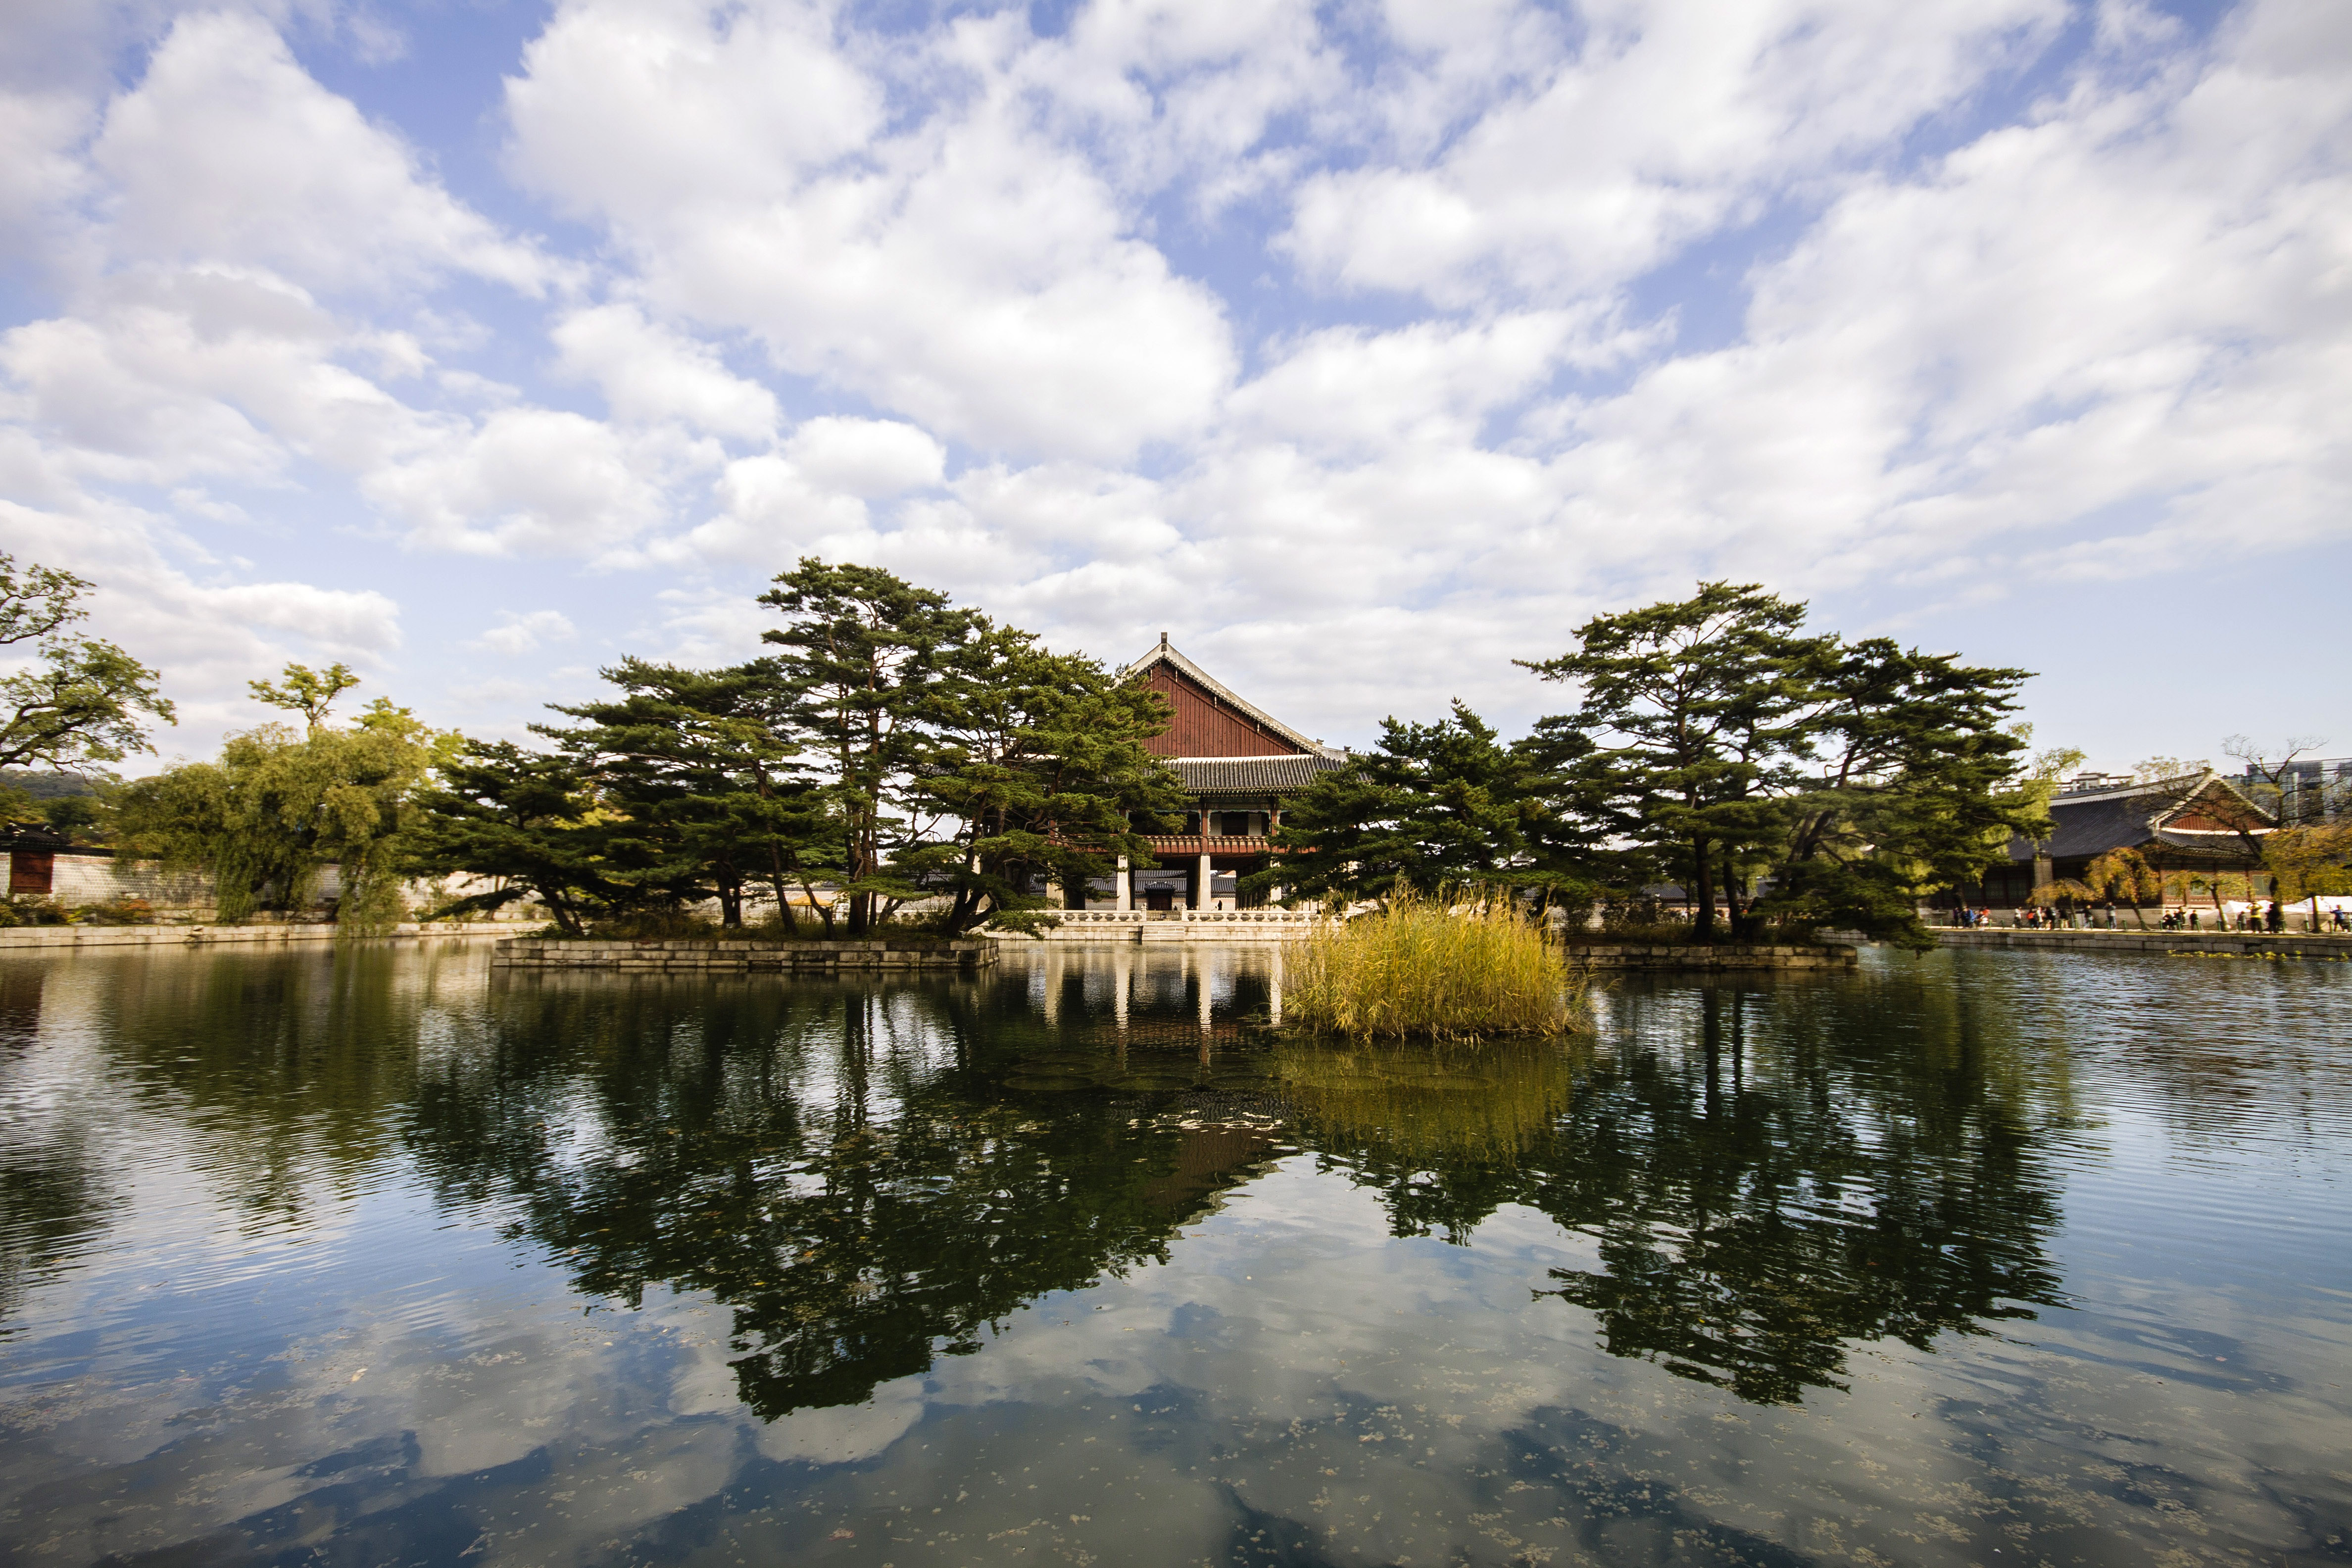 Palace and lake landscape  in Seoul South  Korea  image 